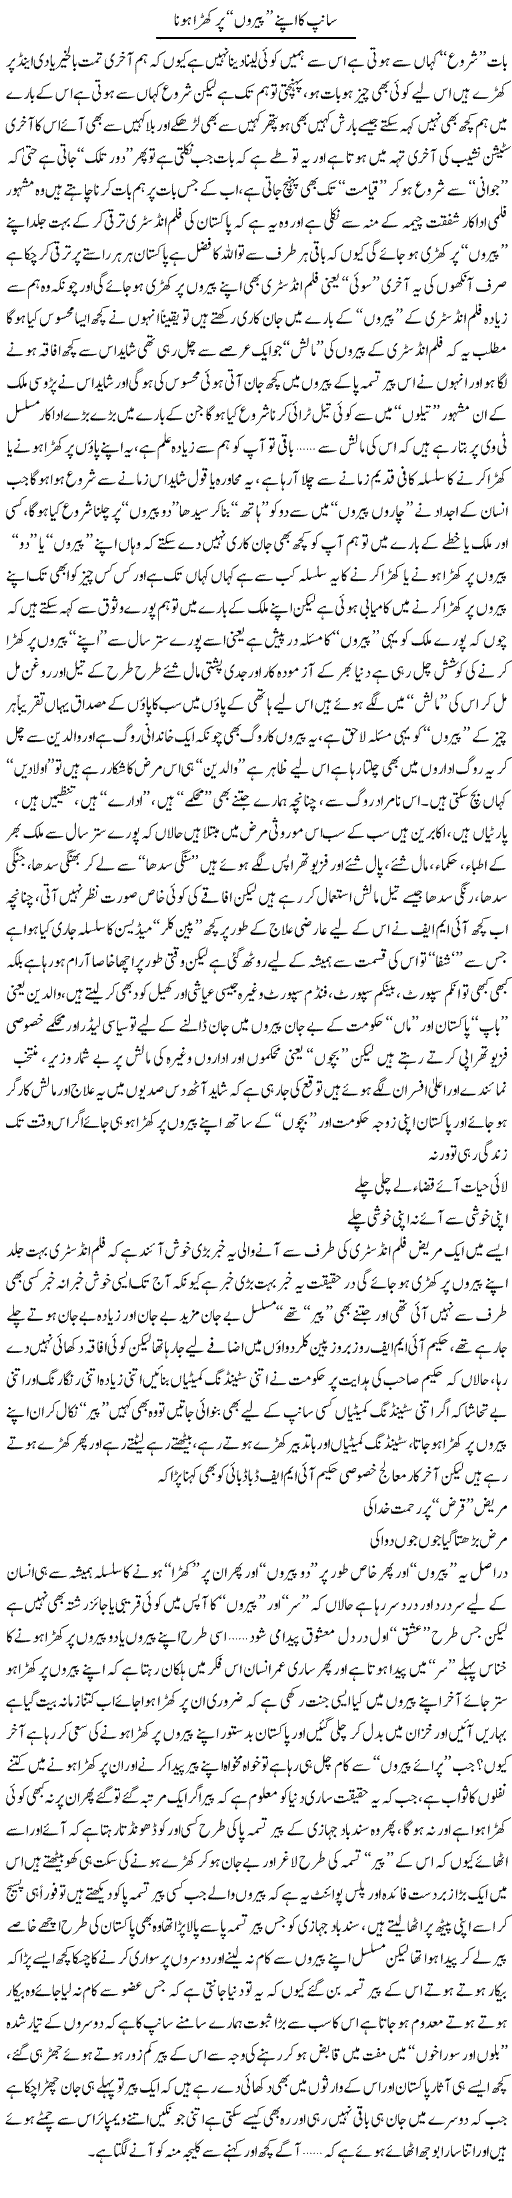 Saanp Ka Apne Peeron Par Khara Hona | Saad Ullah Jan Barq | Daily Urdu Columns